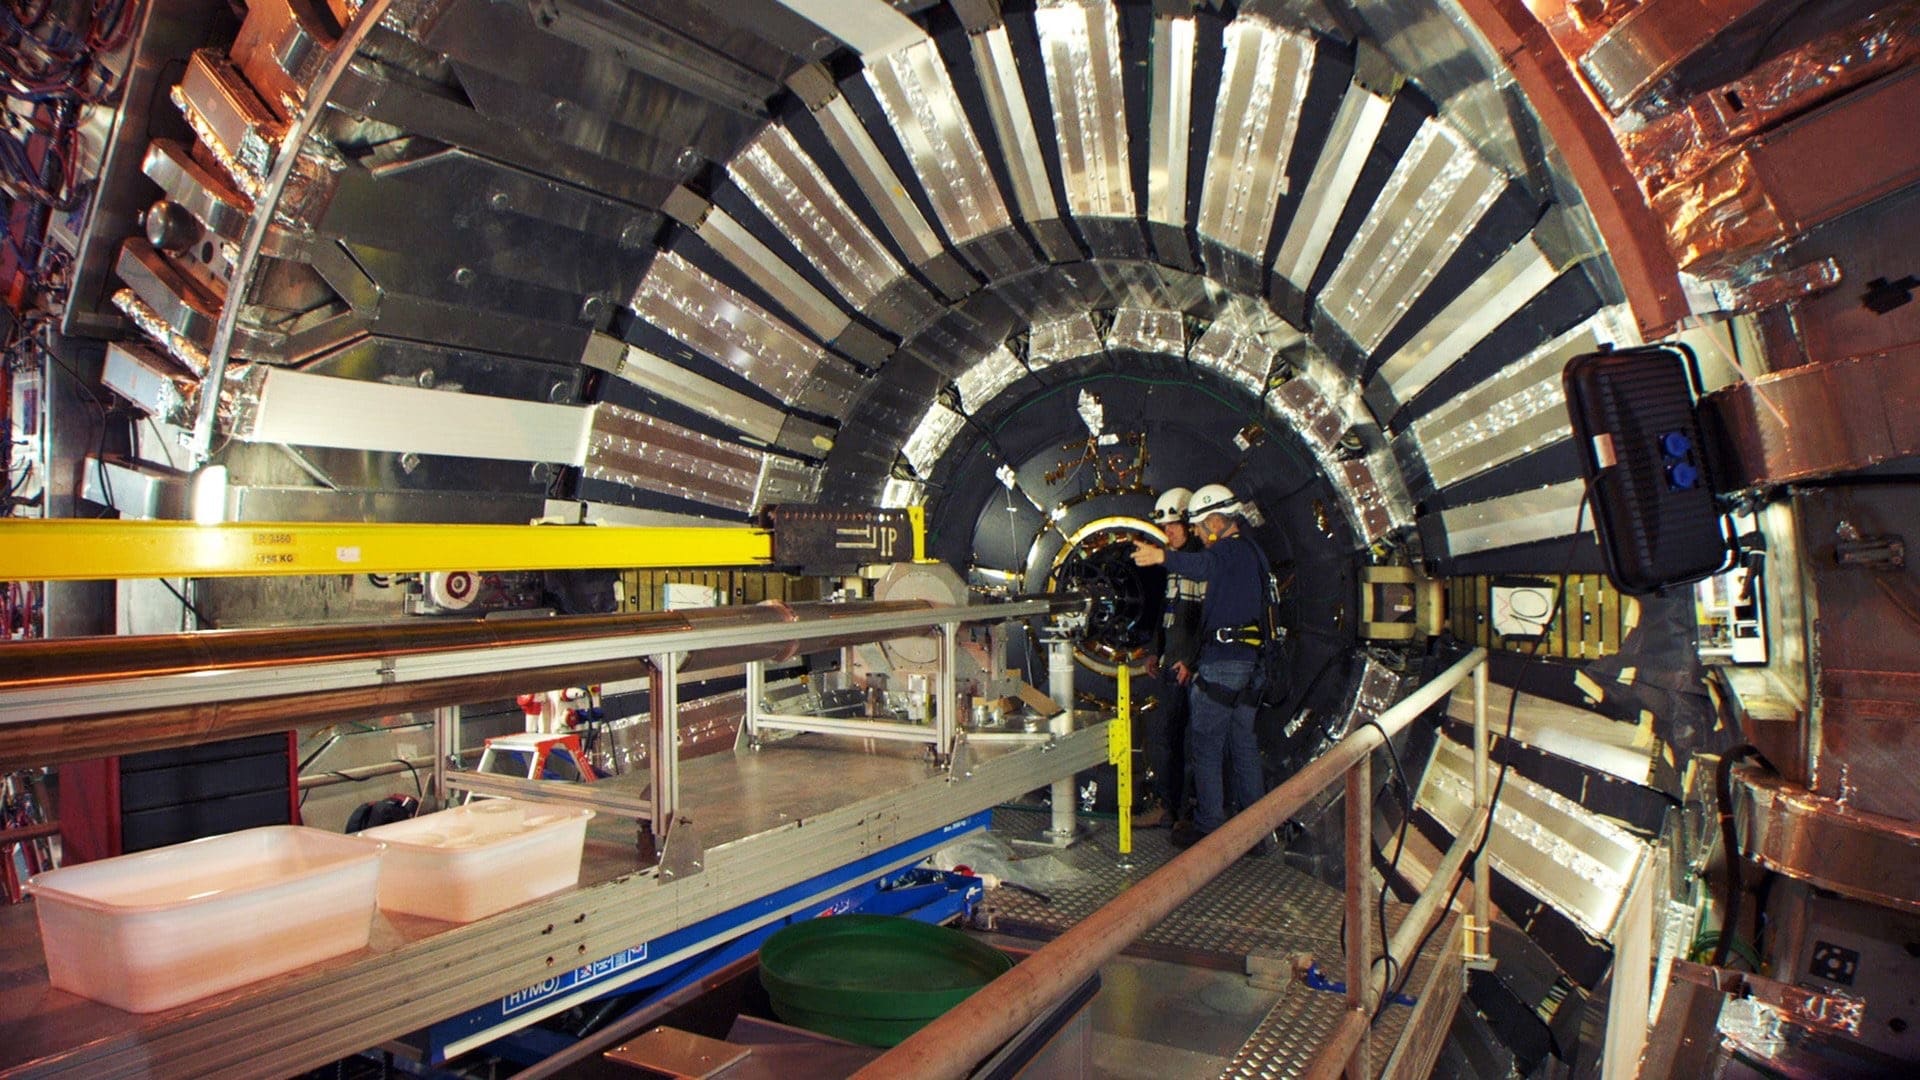 CERN 2013 123movies